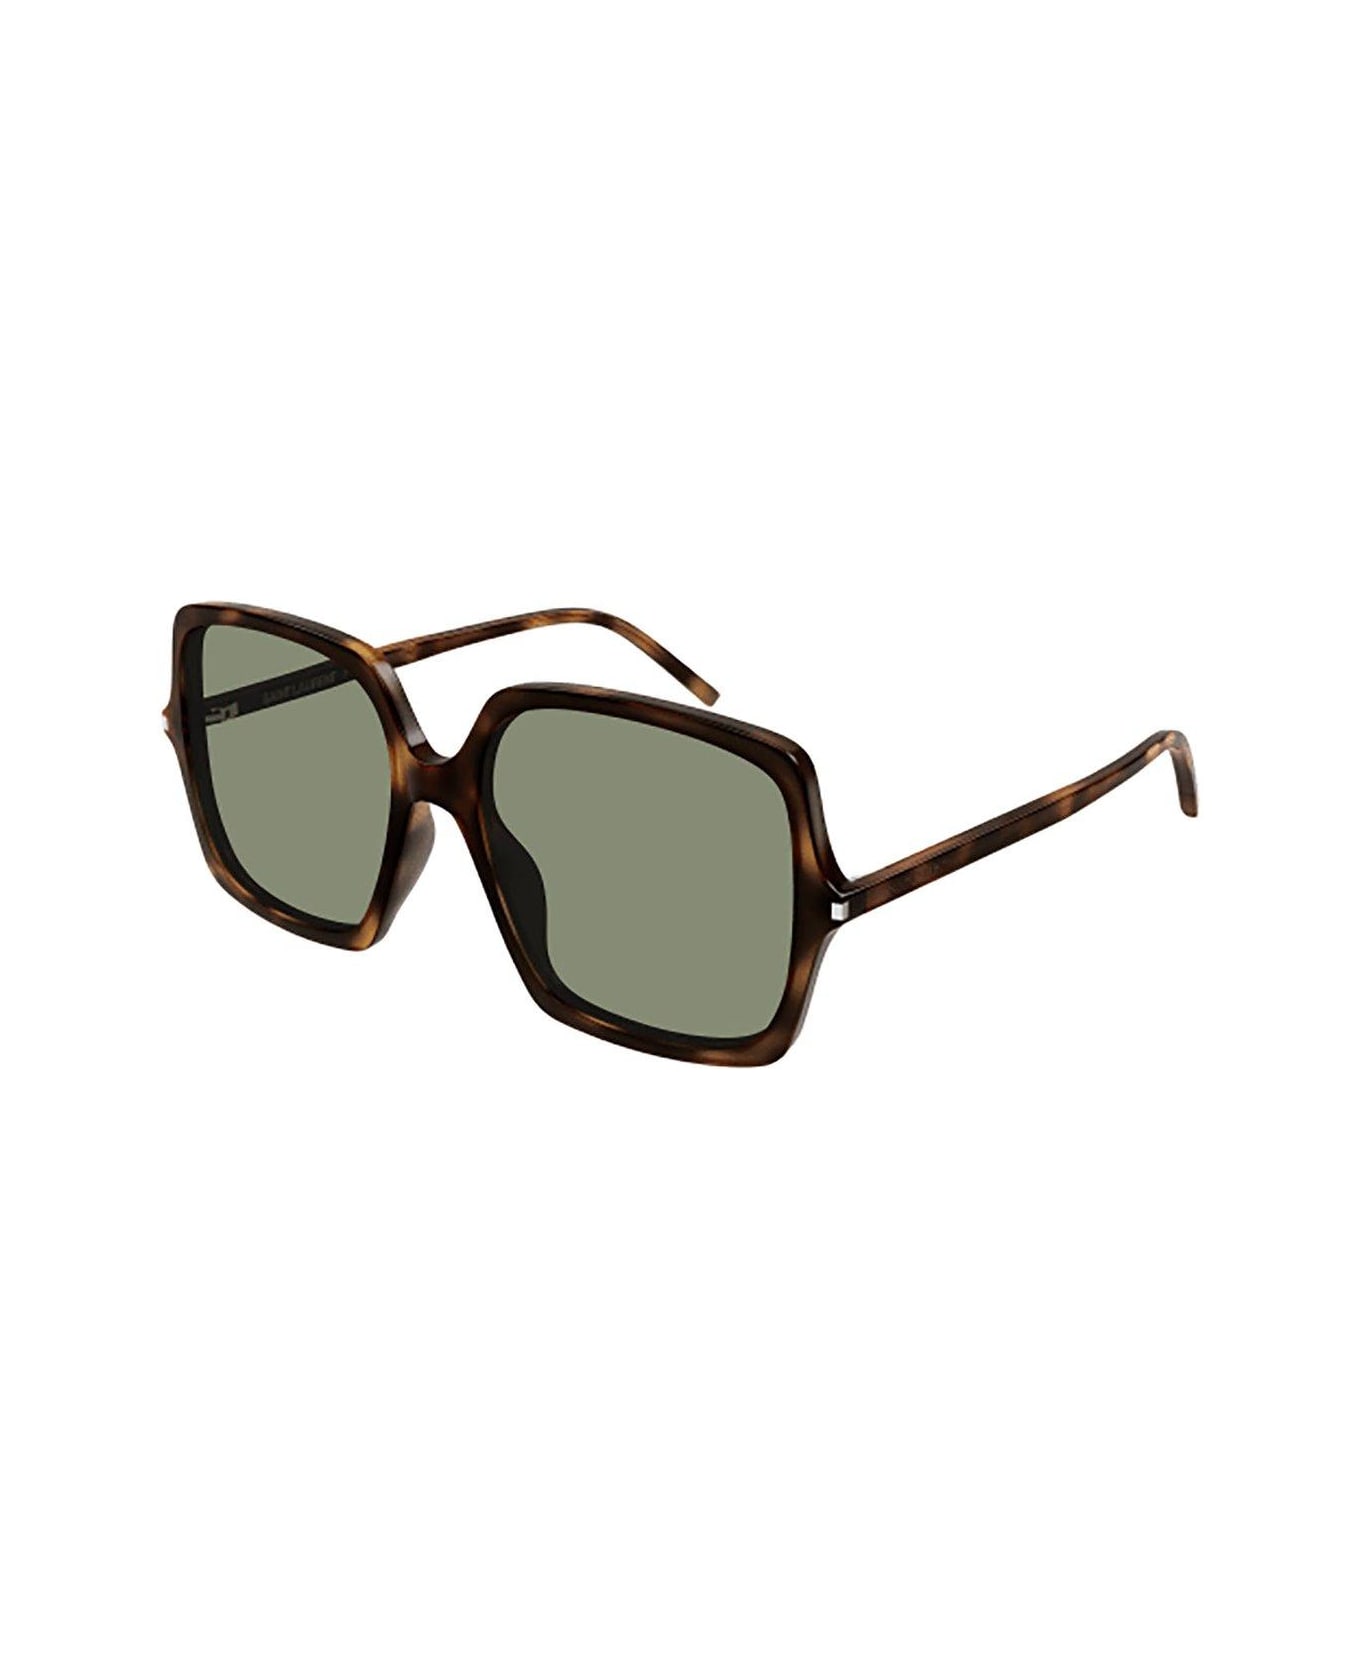 Saint Laurent Eyewear Square Frame Sunglasses - 002 havana havana green サングラス